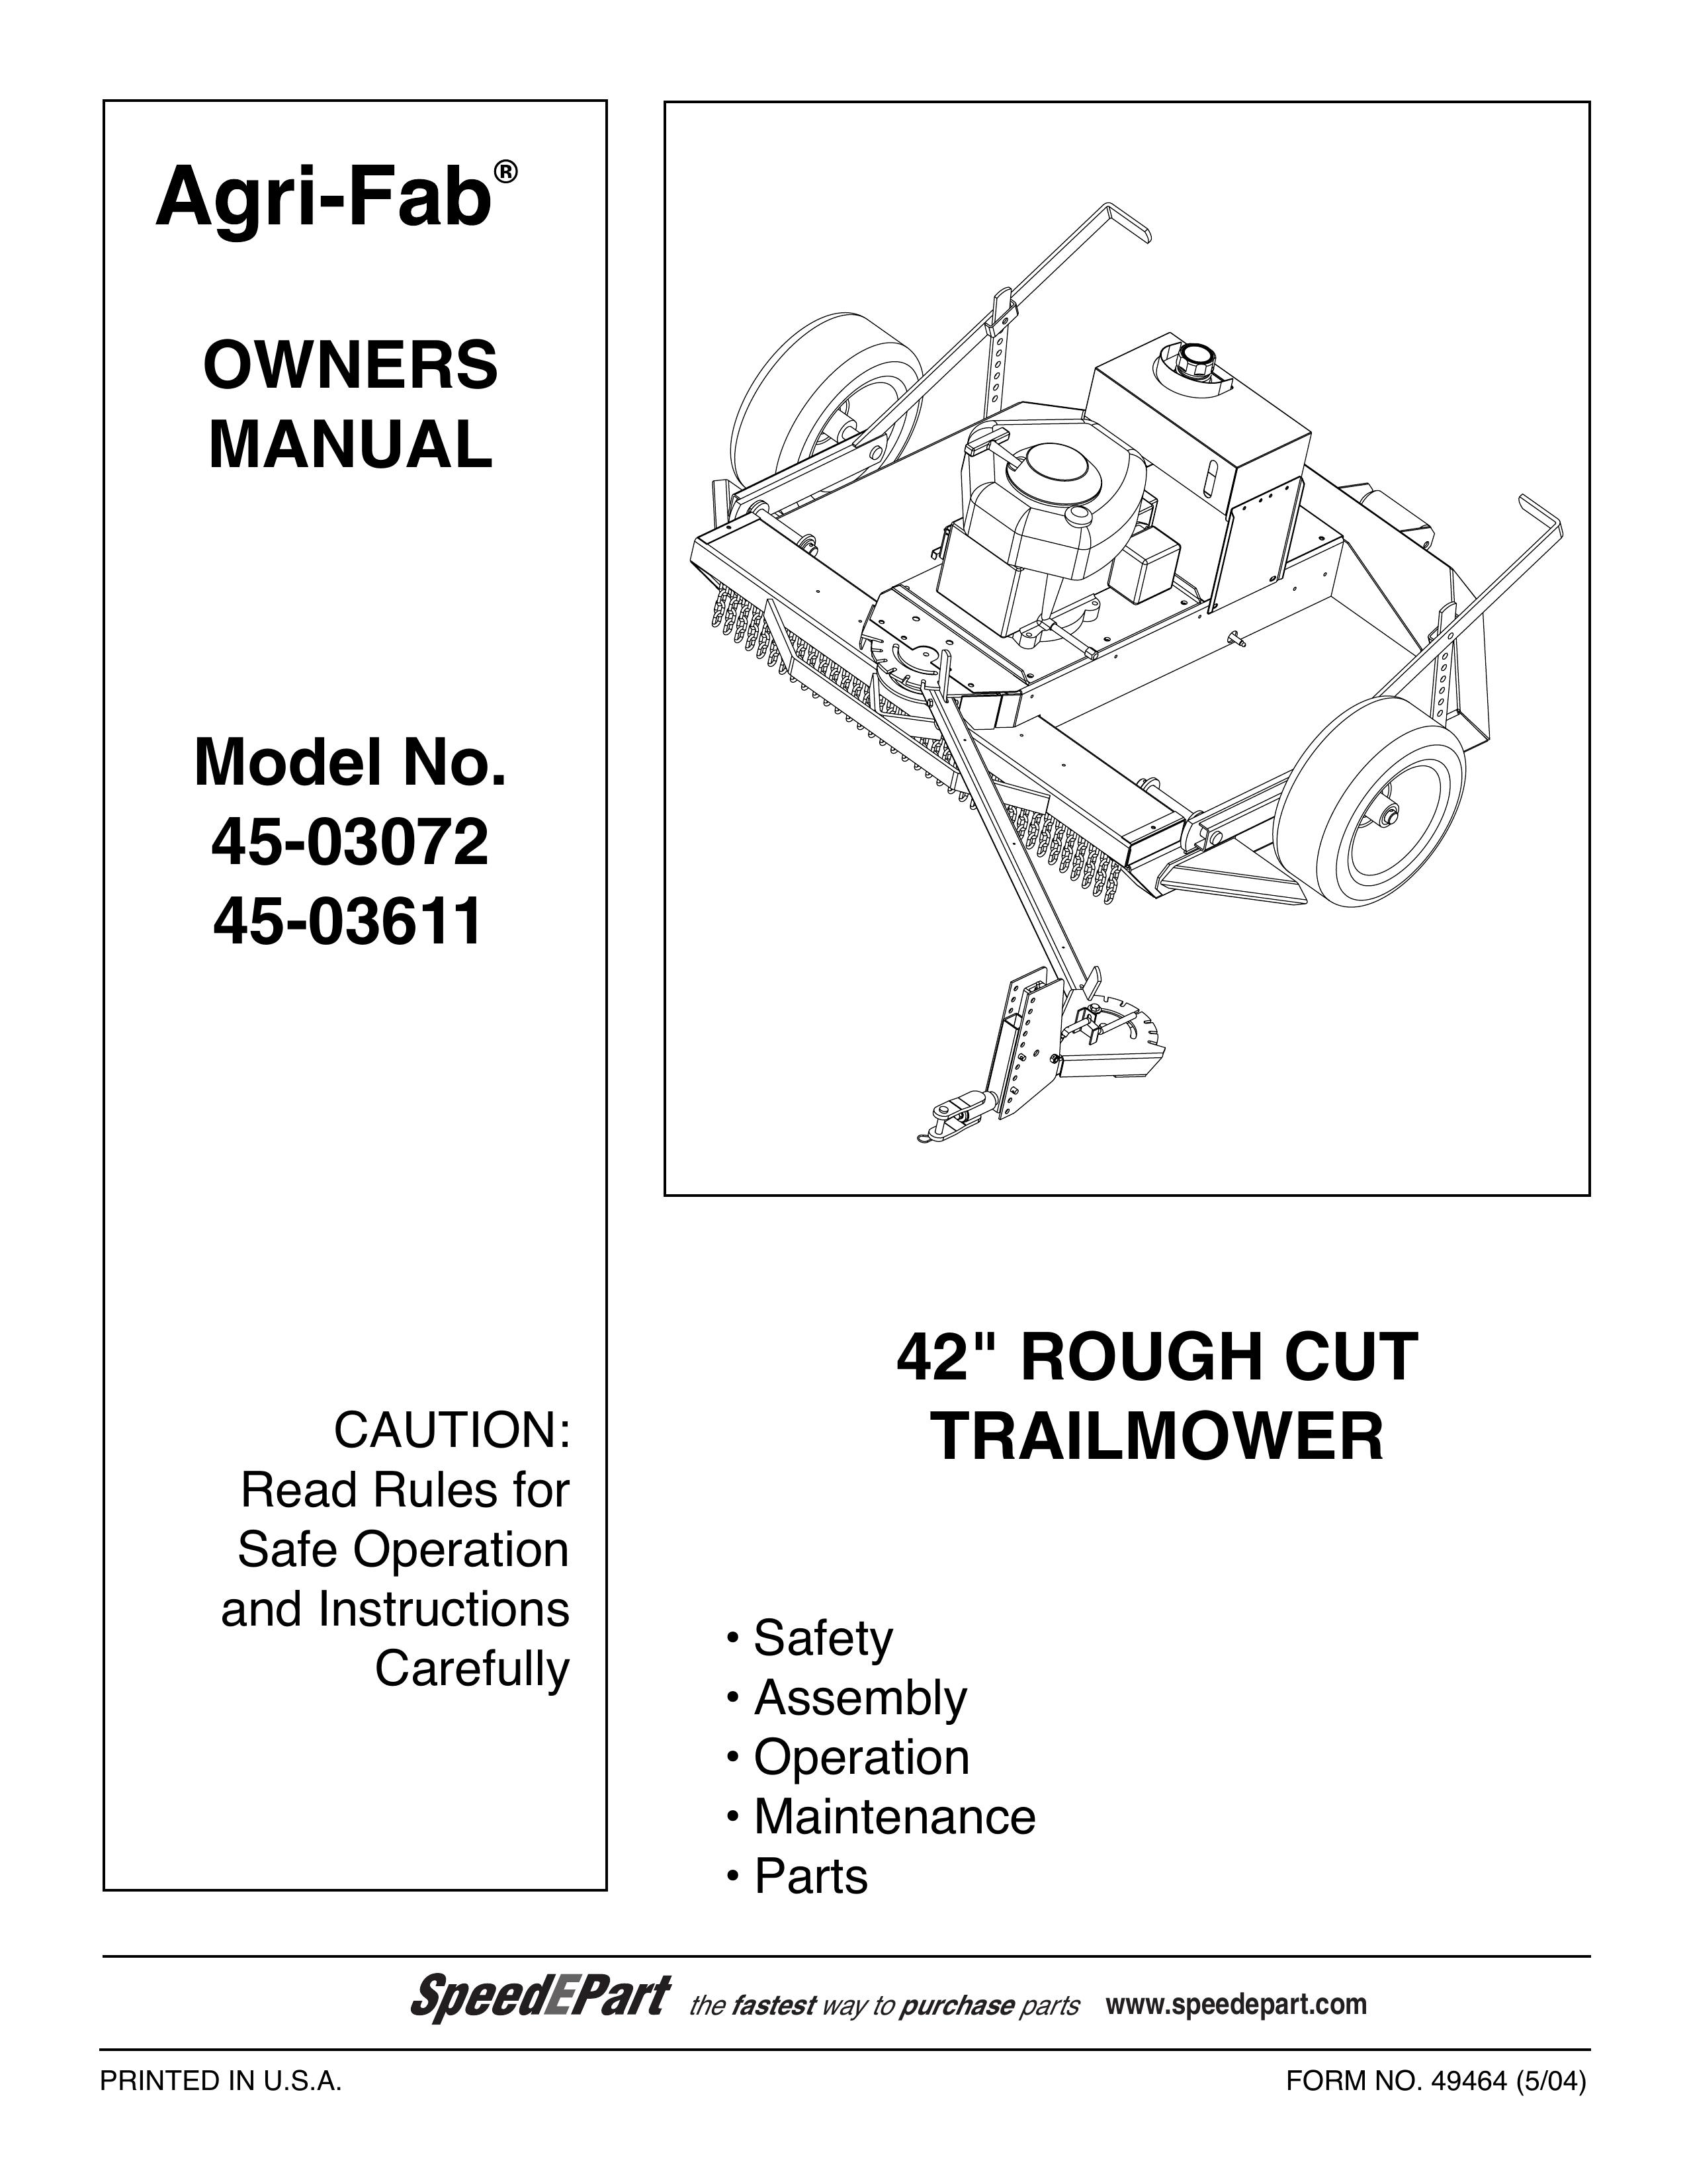 Agri-Fab 45-03071 Lawn Mower User Manual